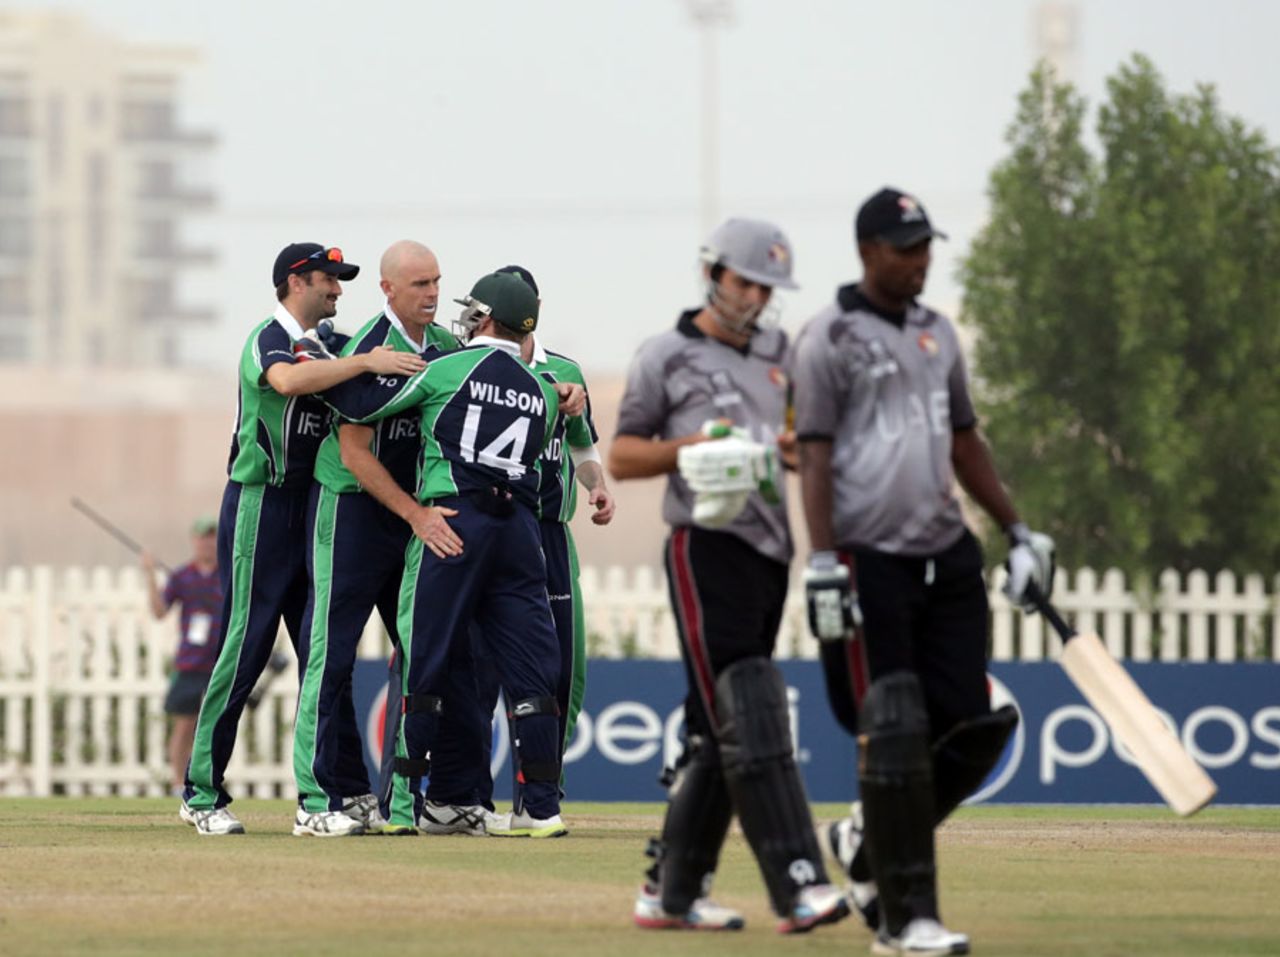 The Ireland players celebrate a wicket, United Arab Emirates v Ireland, ICC World Twenty20 Qualifiers, Group A, Abu Dhabi, November 17, 2013